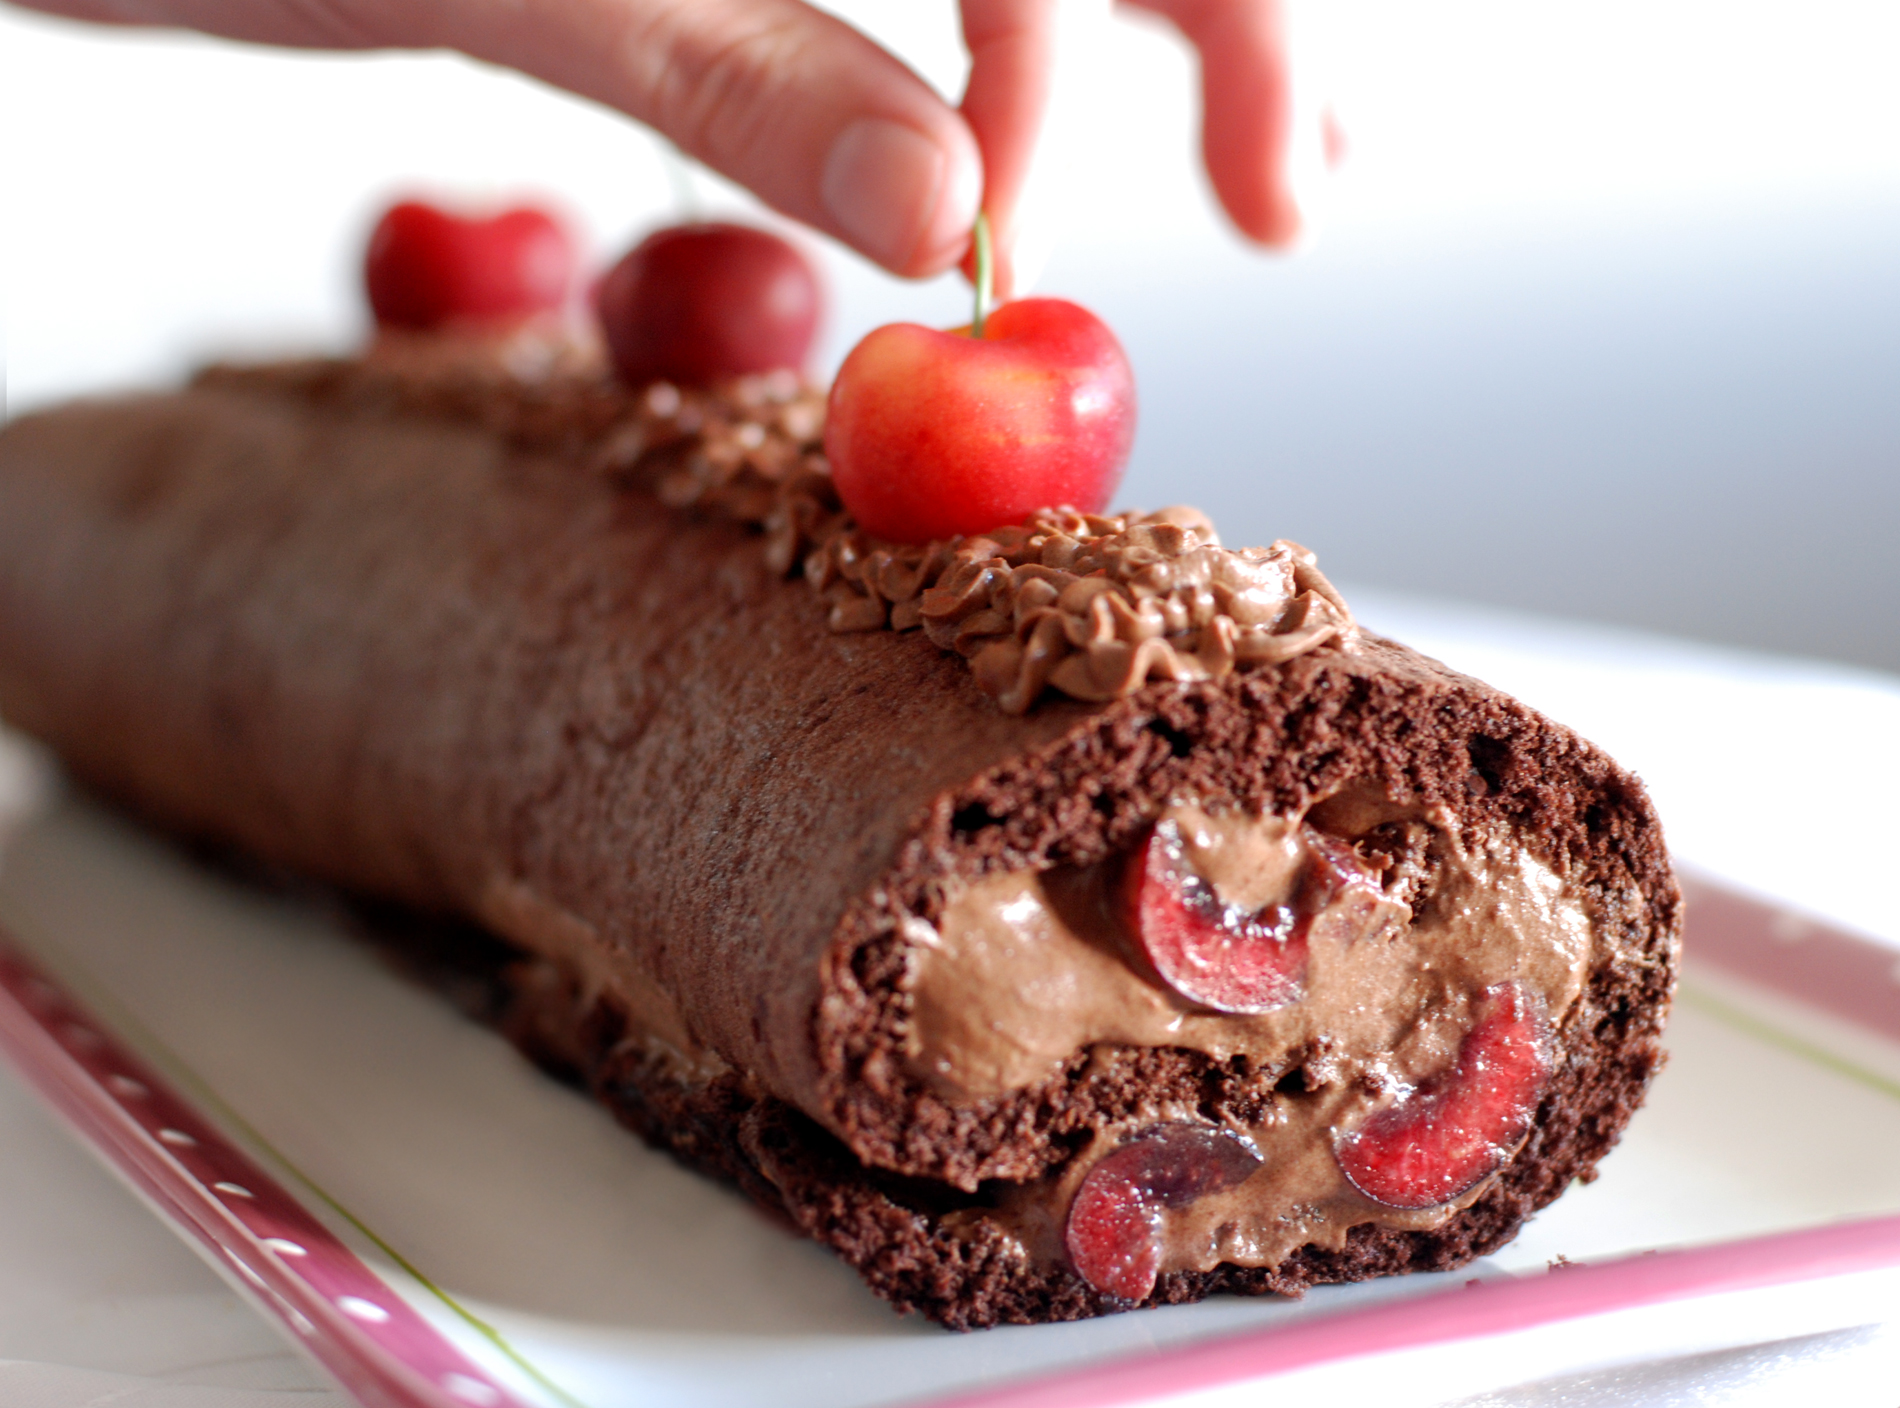 Chocolate Cake Roll with Cherries